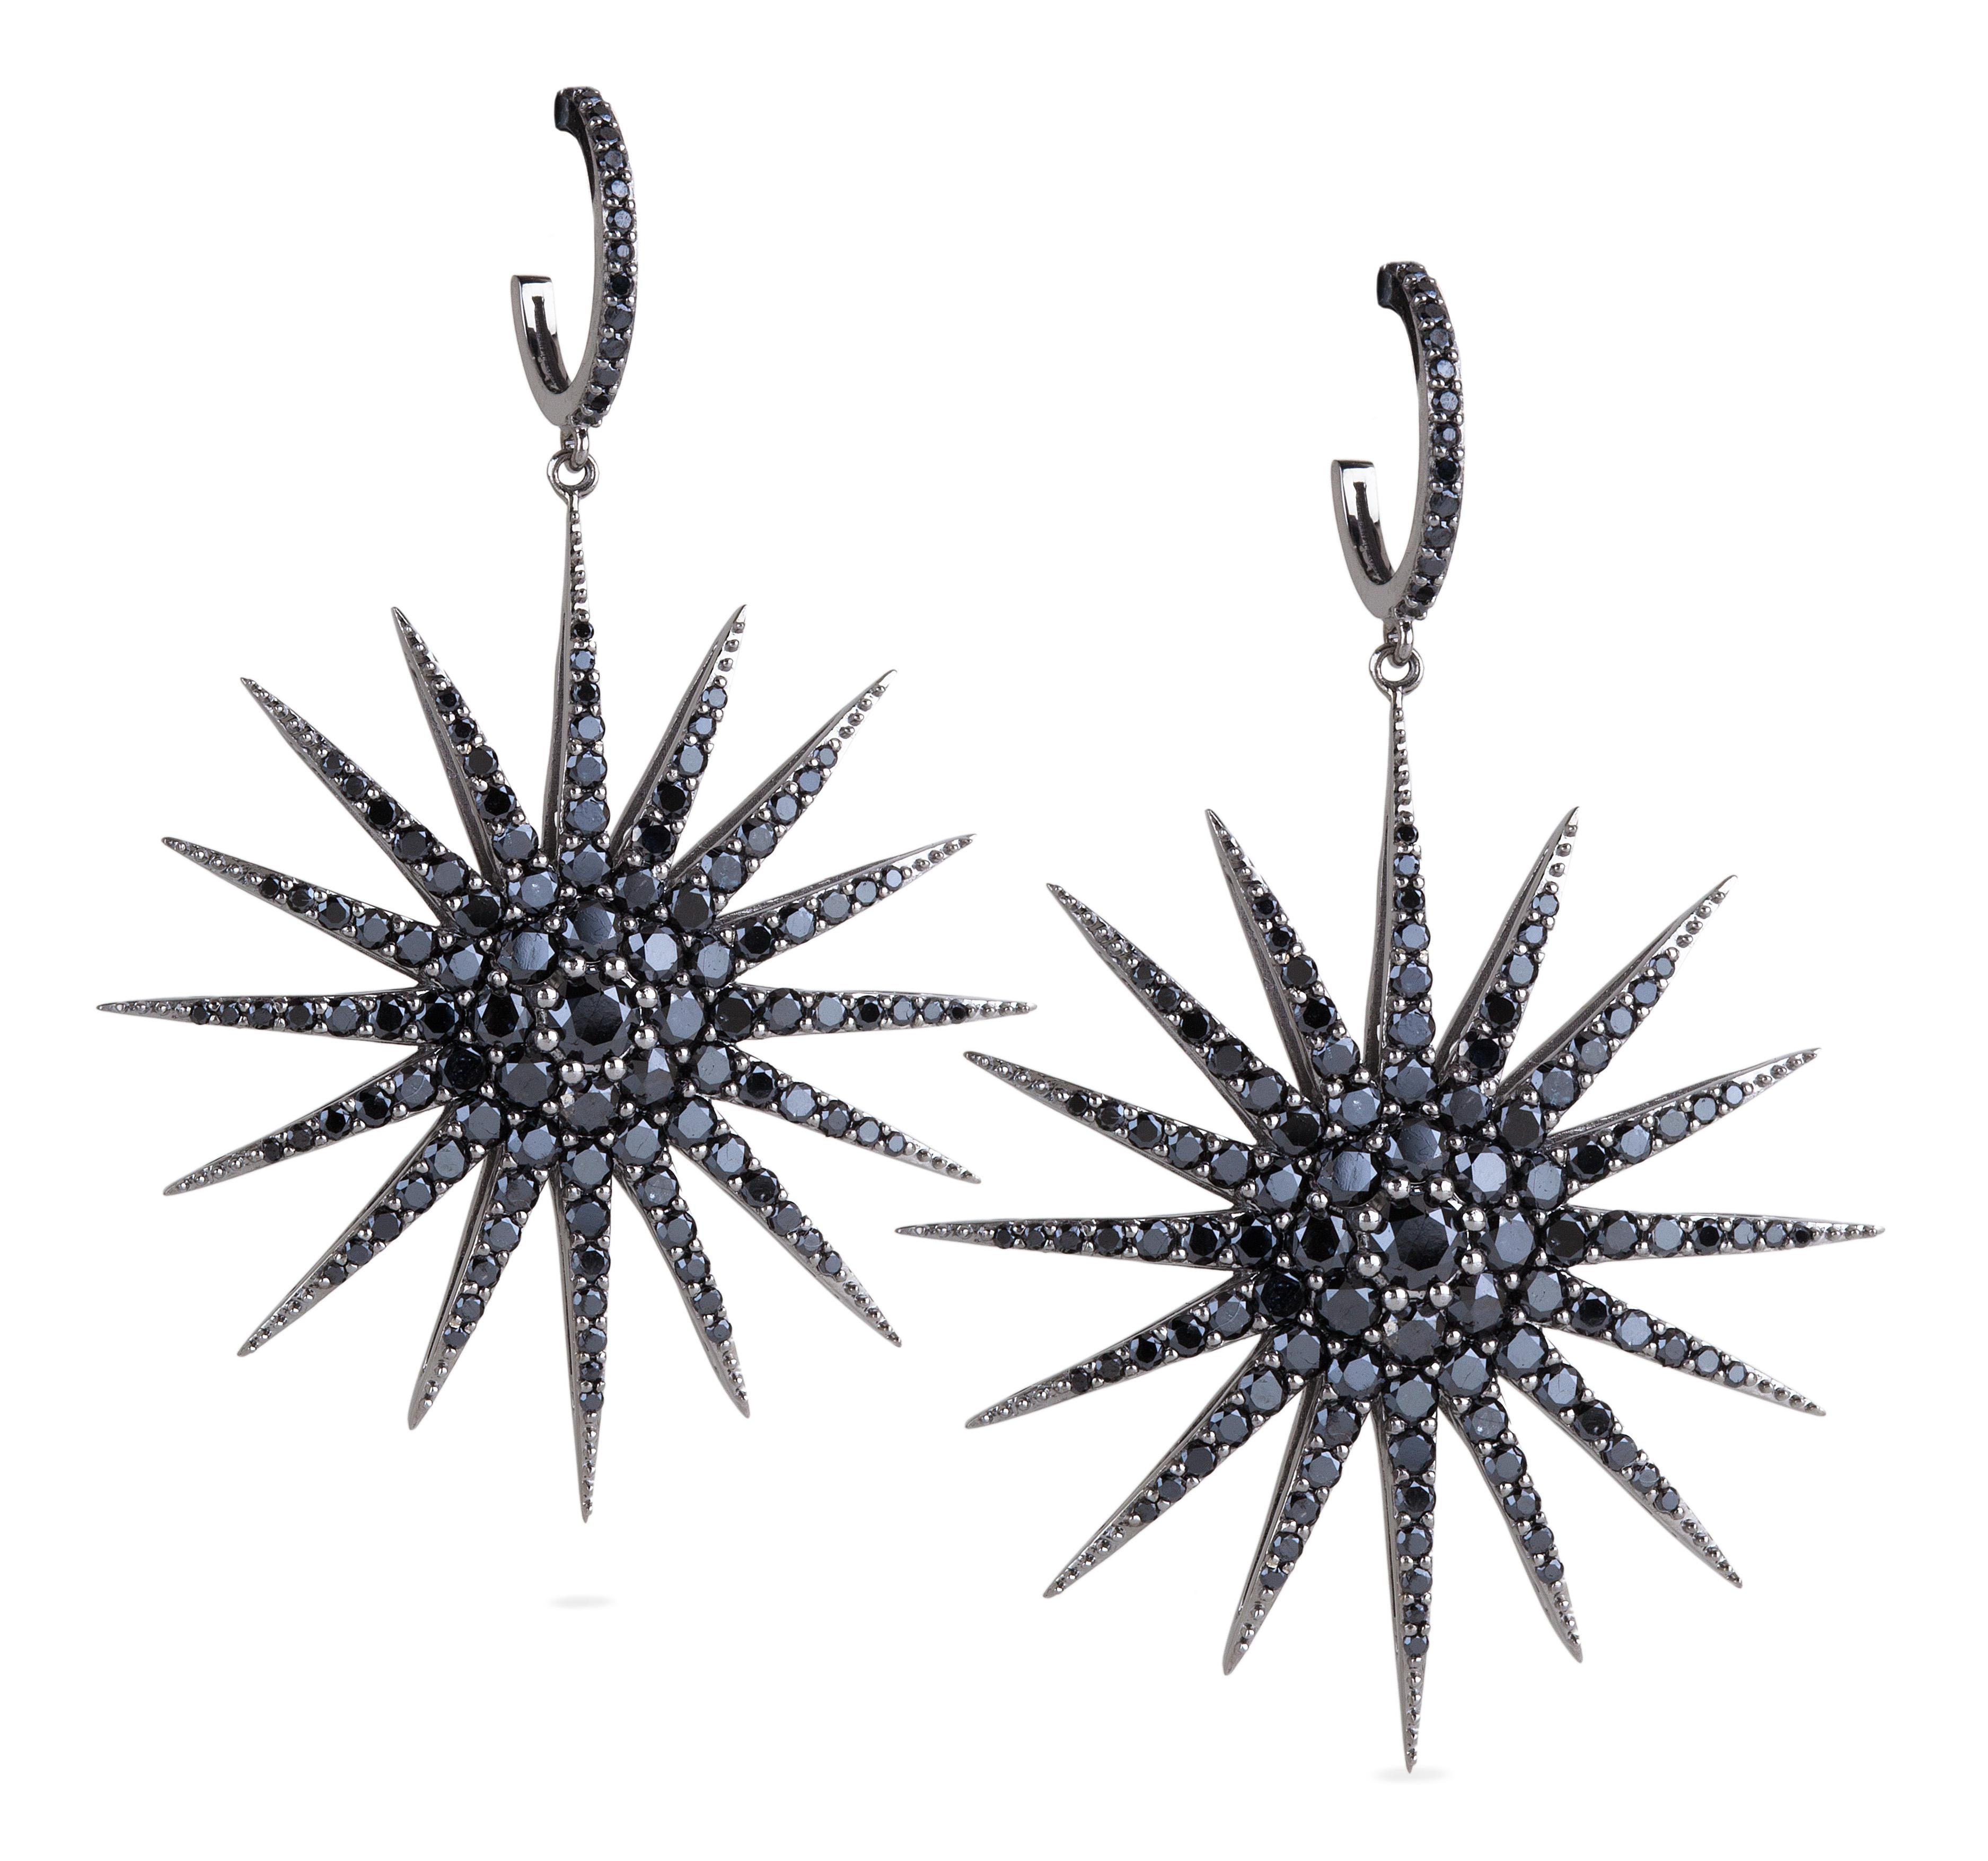 Bochic Classic Star Black Diamond Earrings Set In 18 K Black Gold
Black Diamonds - 6 Carats 
The earrings from the 